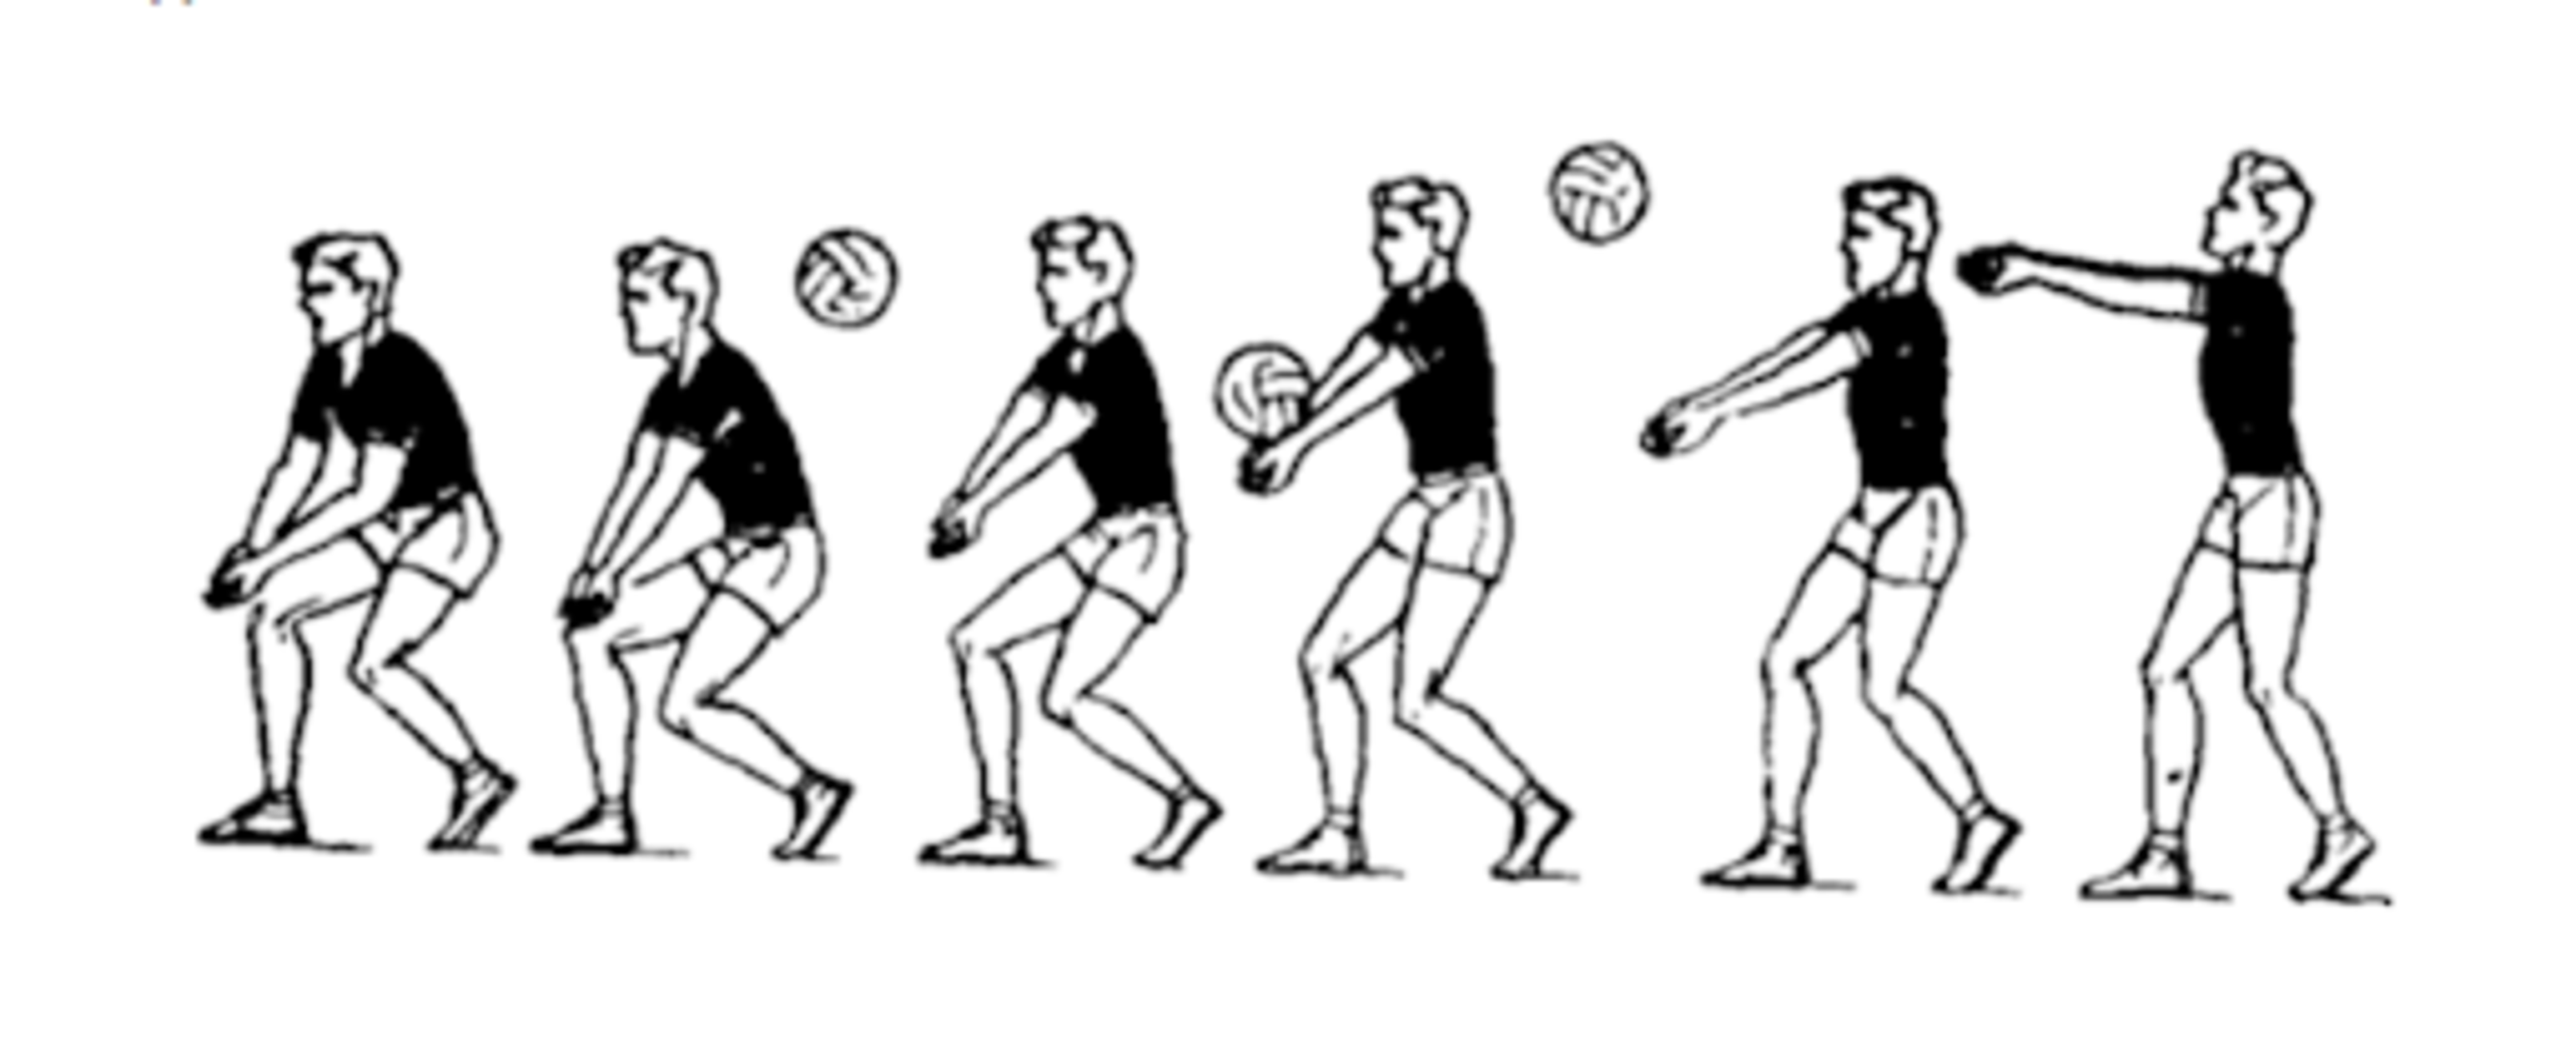 Передача мяча снизу двумя руками в волейболе. Техника приема и передачи мяча снизу двумя руками в волейболе. Приём мяча снизу 2 руками в волейболе. Техника приема мяча снизу двумя руками. Прием снизу двумя руками в волейболе.